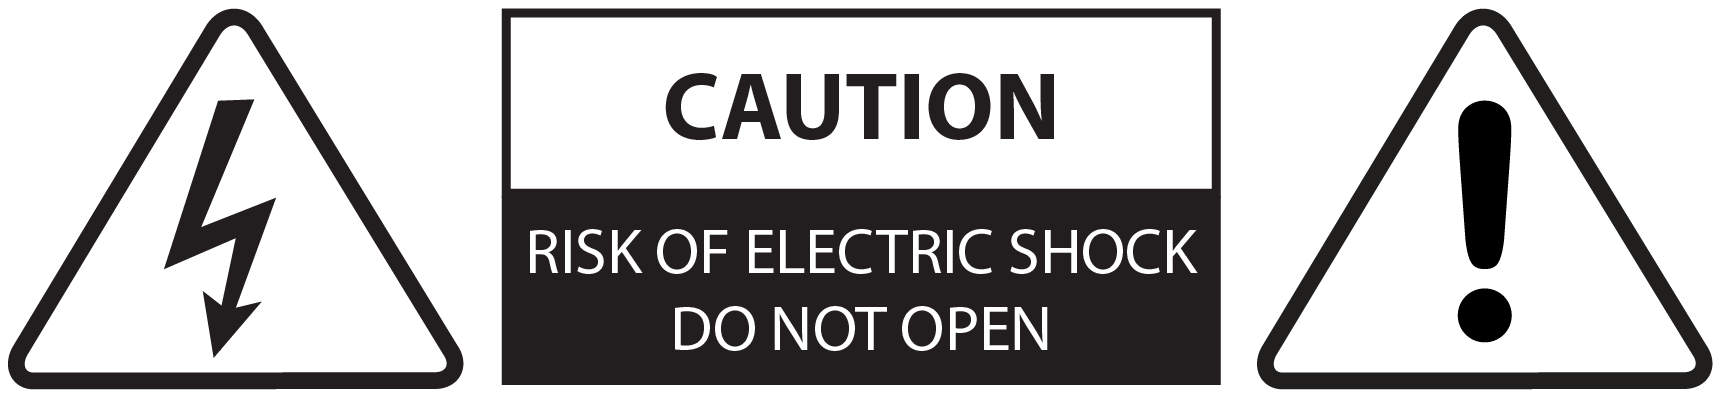 Warning symbols indicating a risk of electric shock